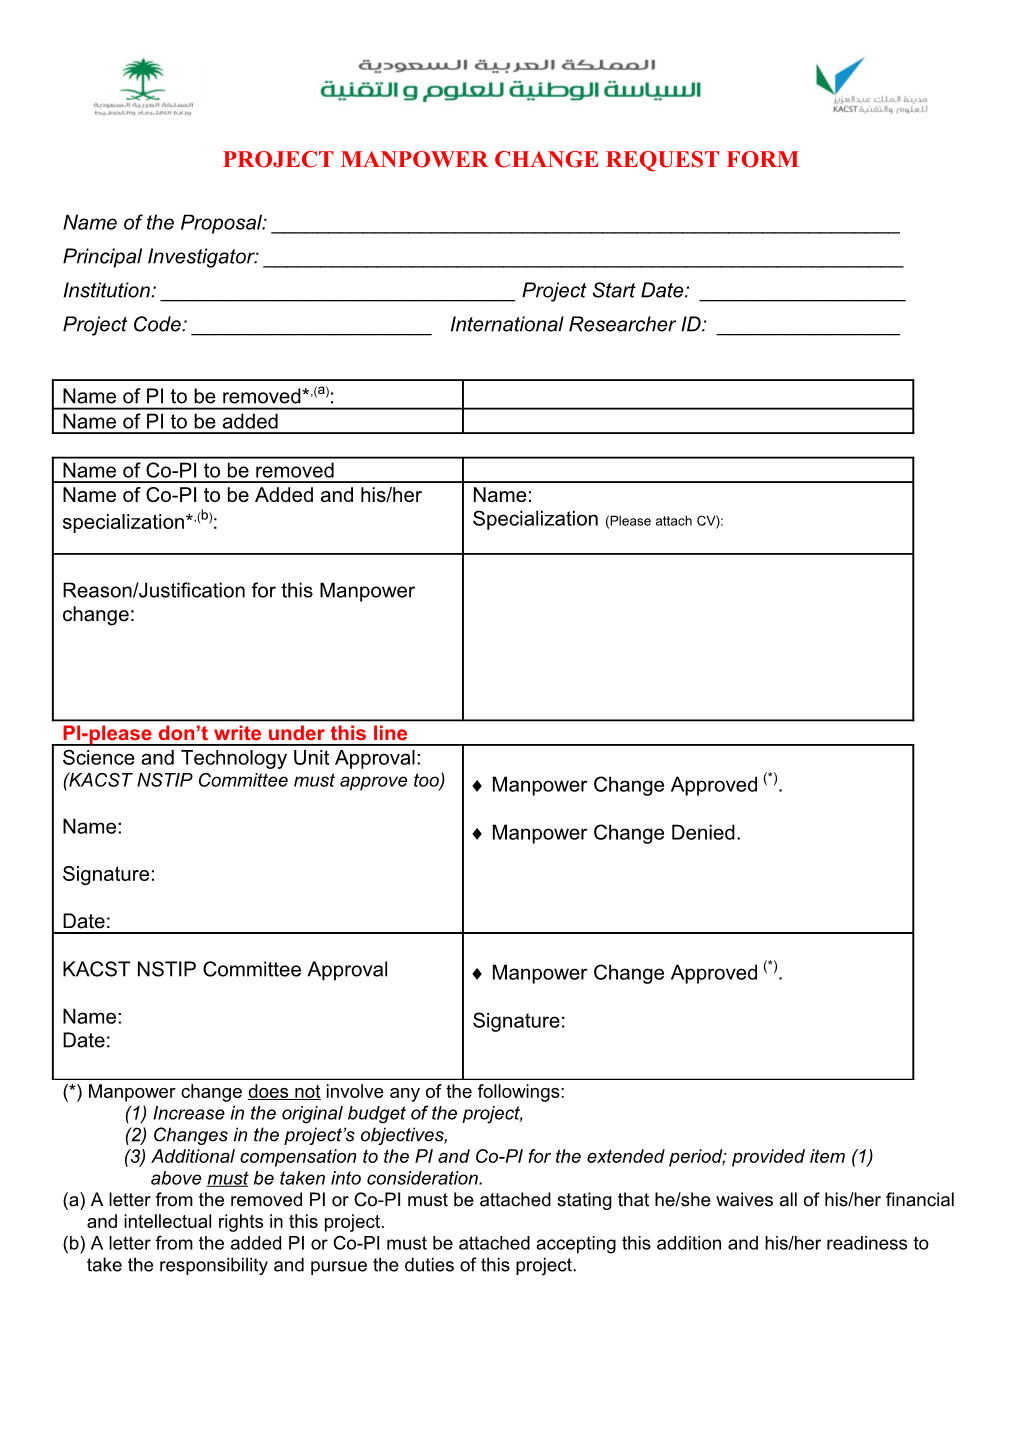 Project Manpower Change Request Form